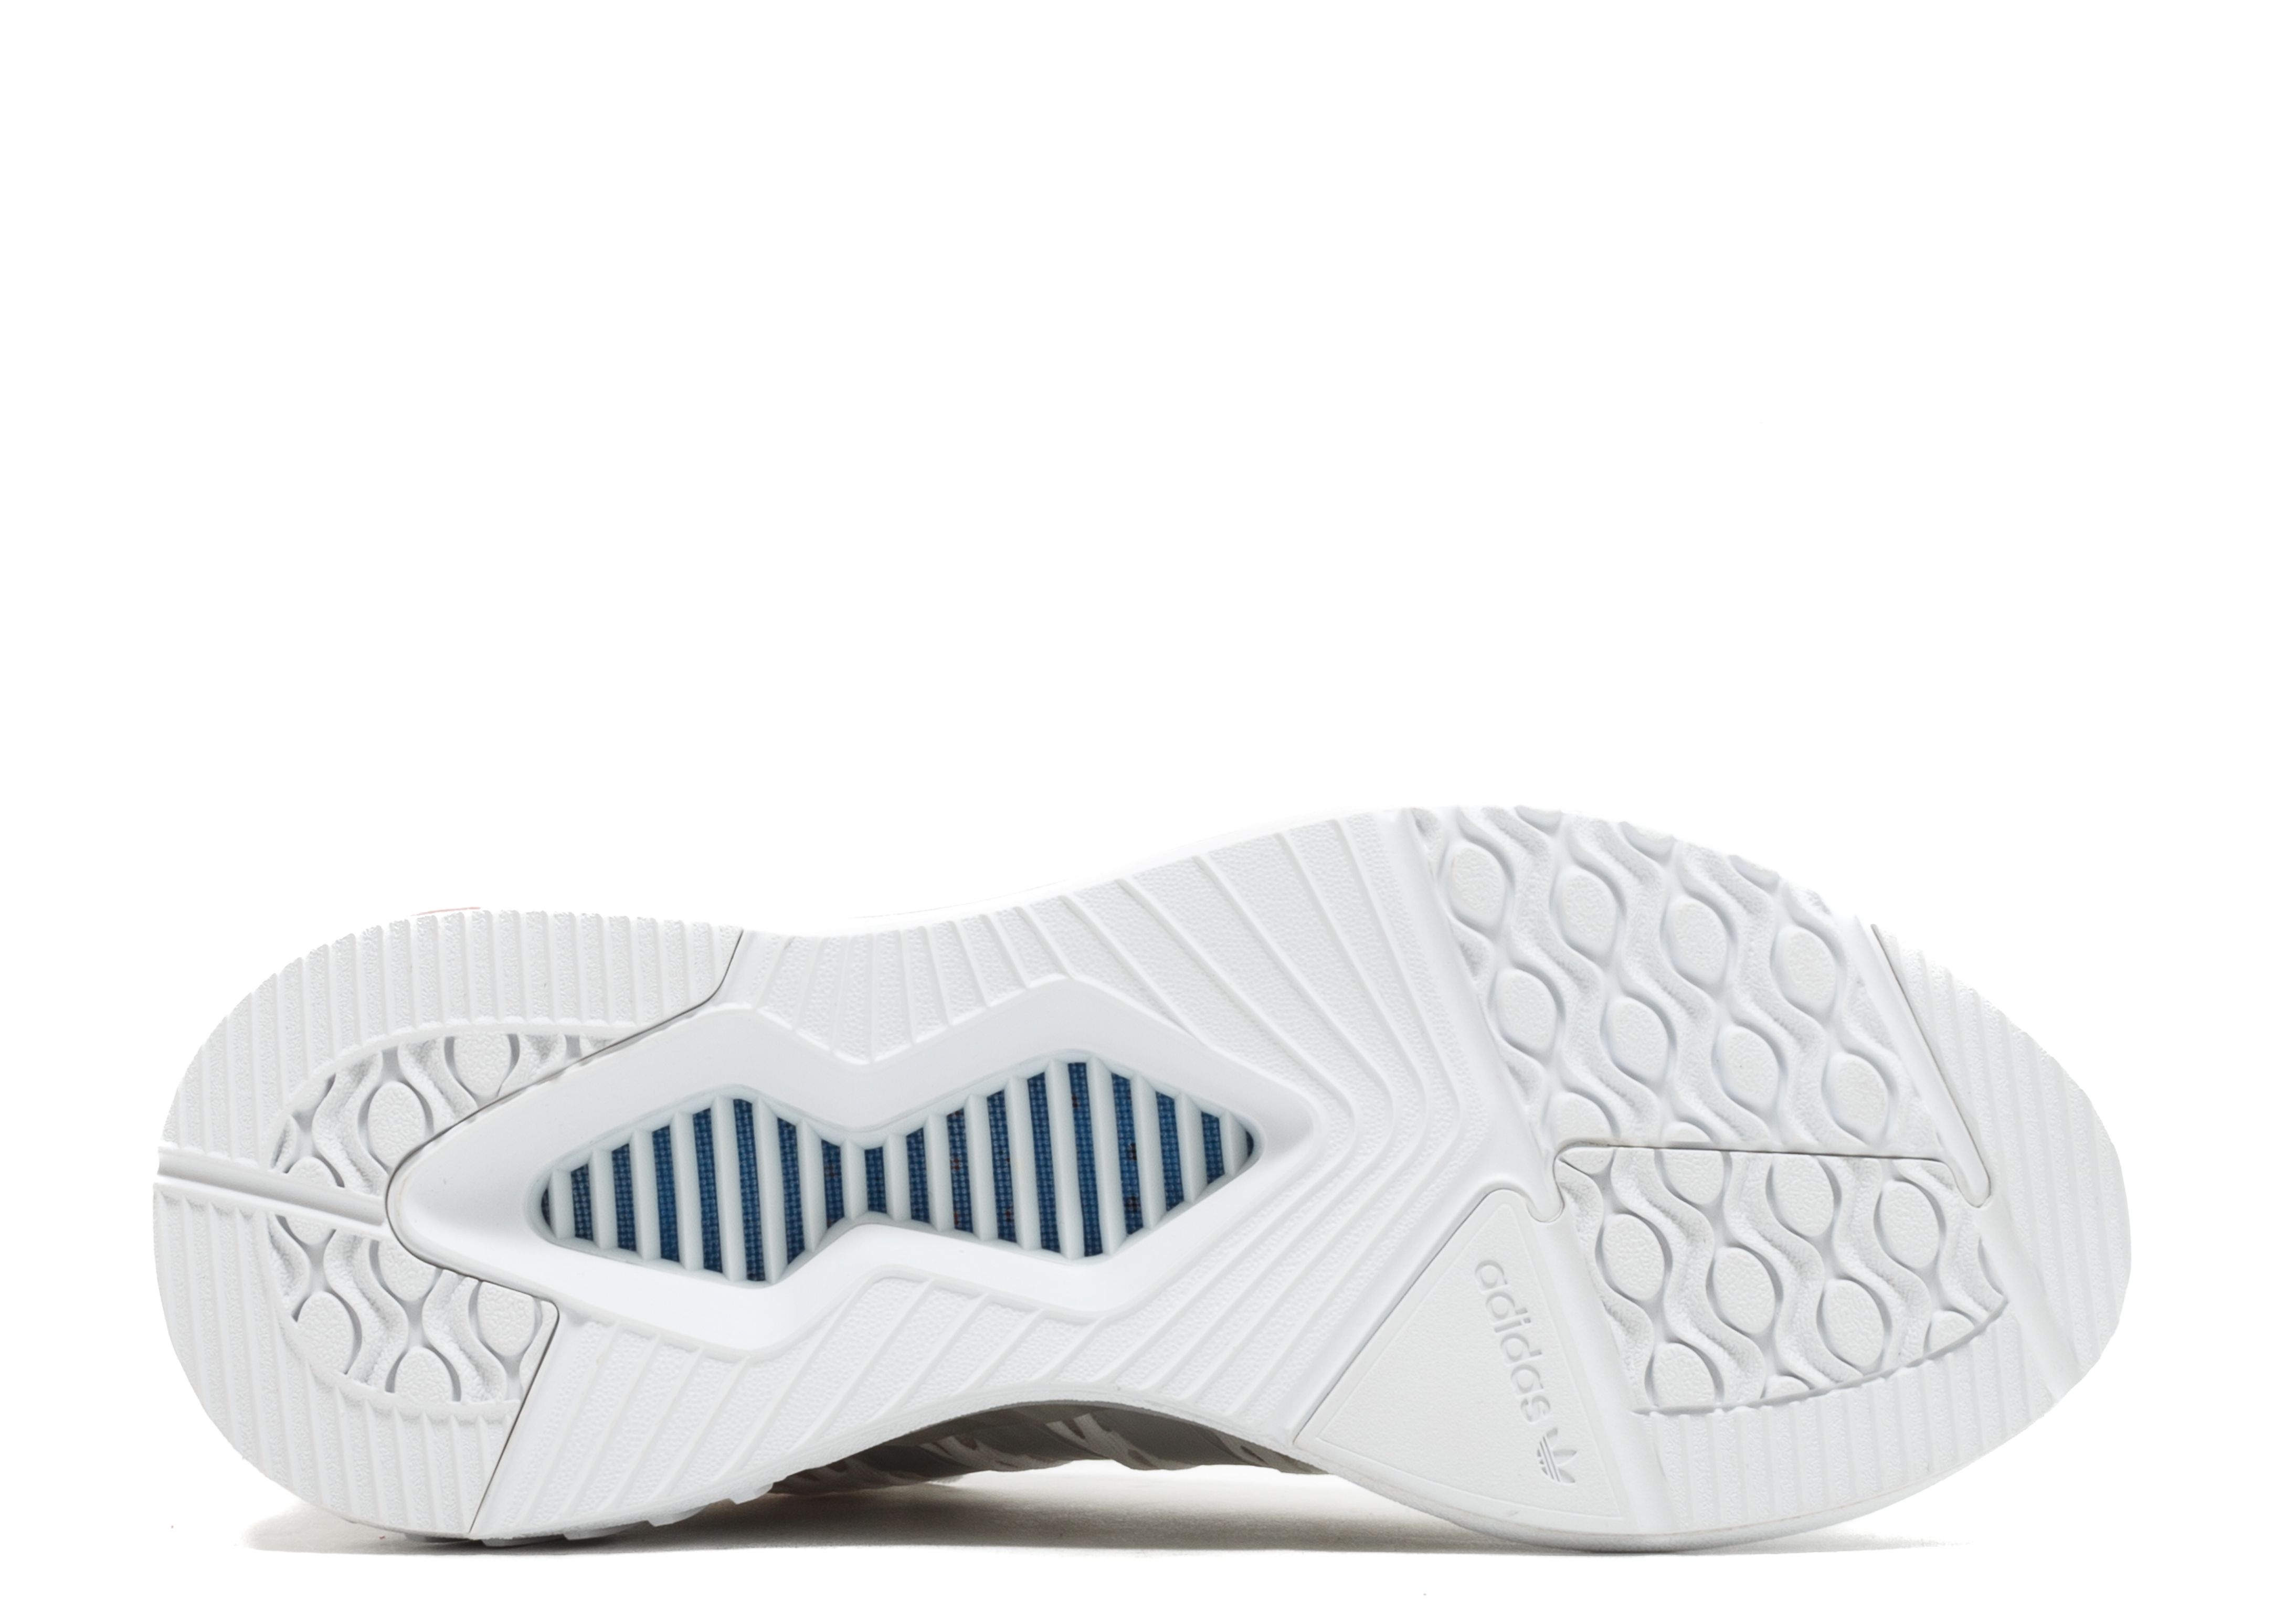 ClimaCool 02/17 'White Grey' - Adidas - BZ0246 - footwear white